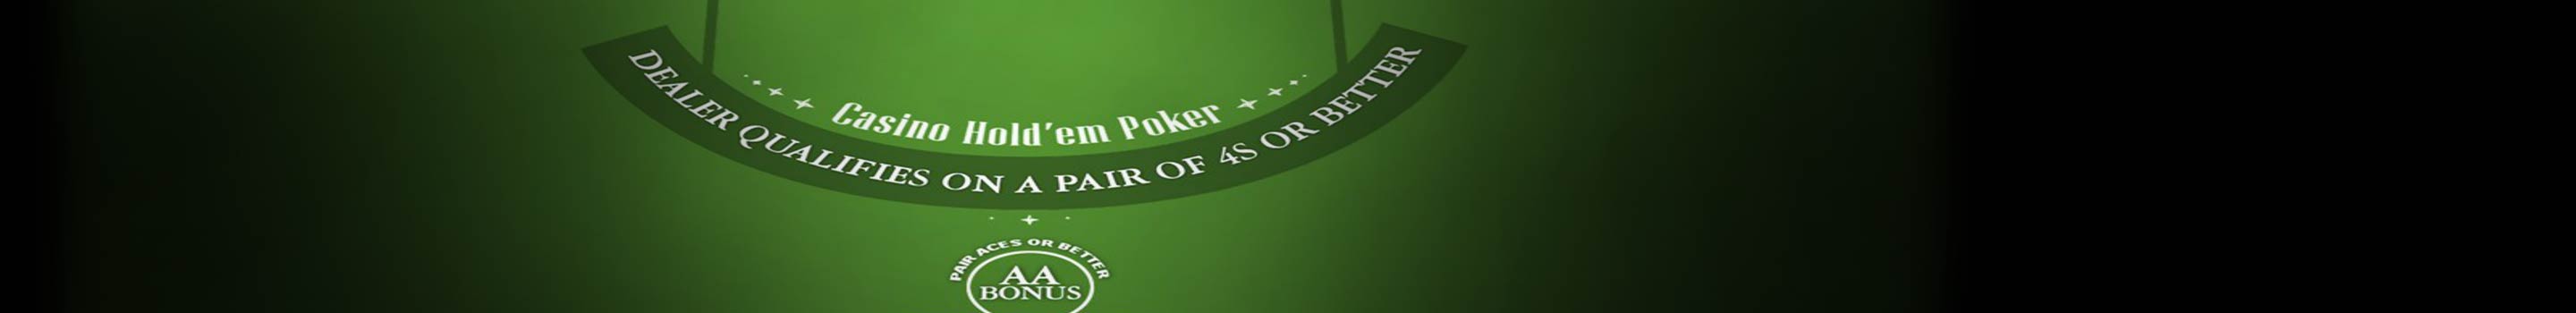 Casino Hold’em poker